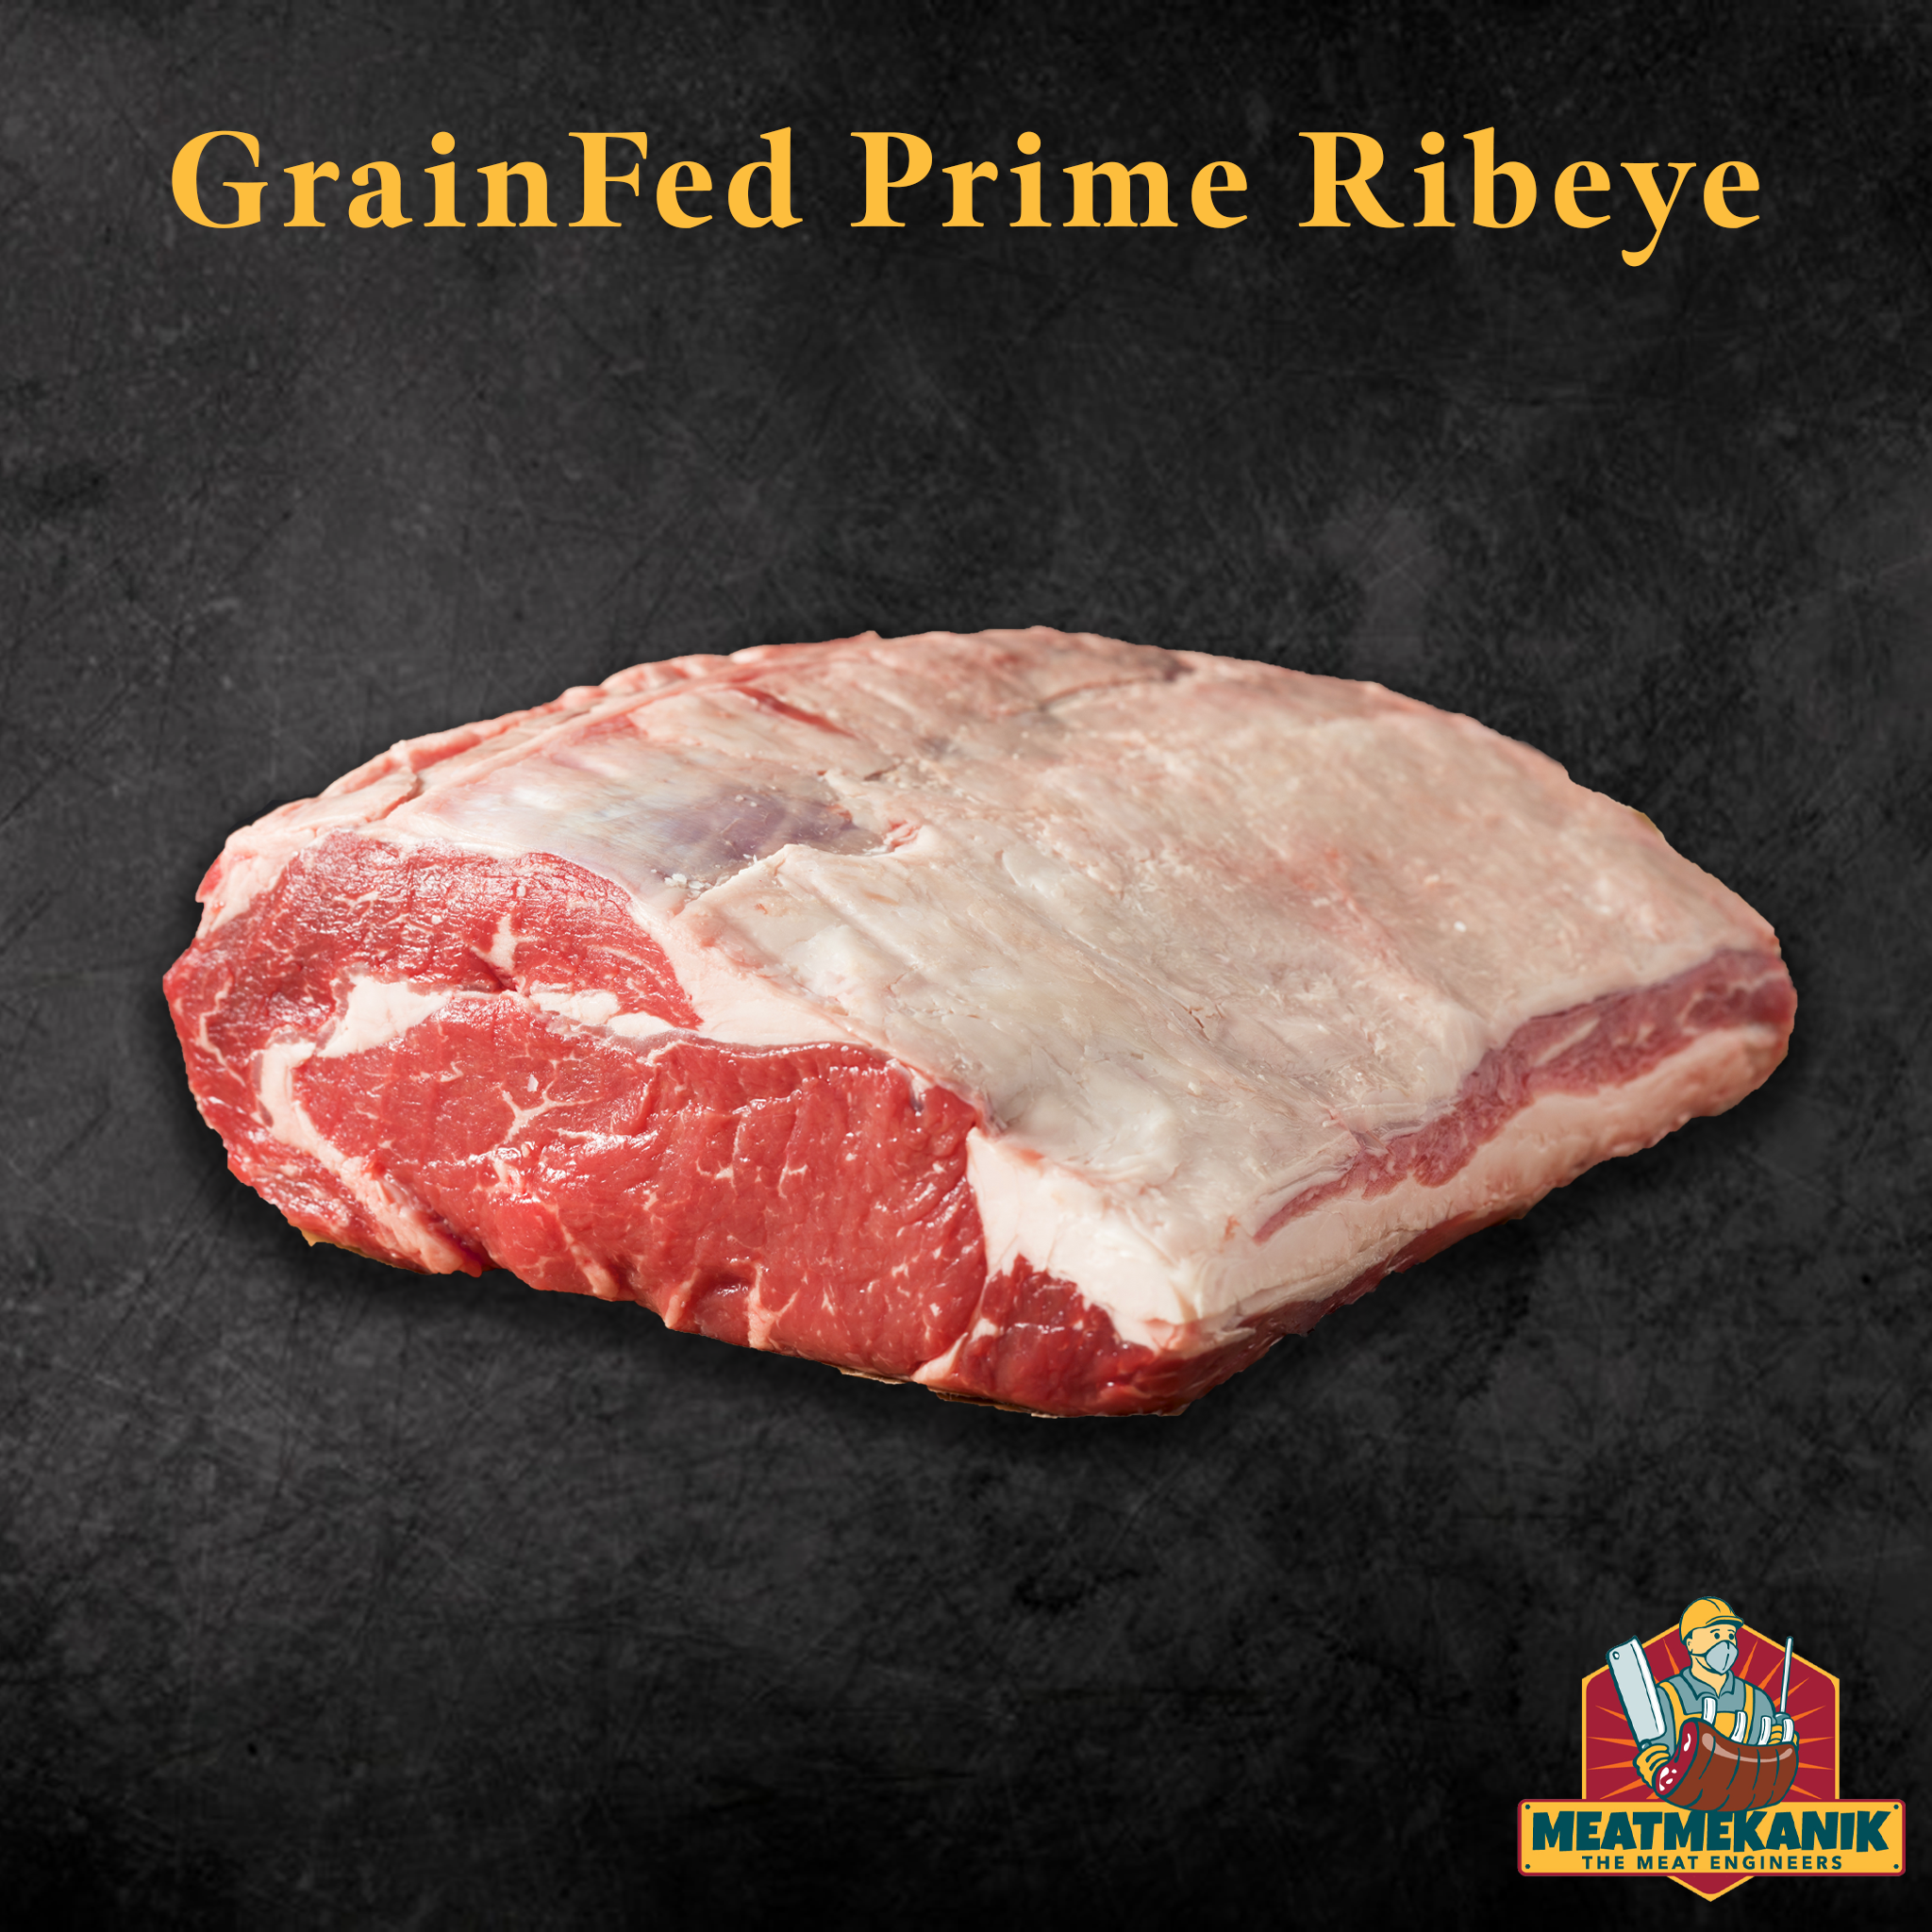 Grainfed Prime Ribeye - Meat Mekanik